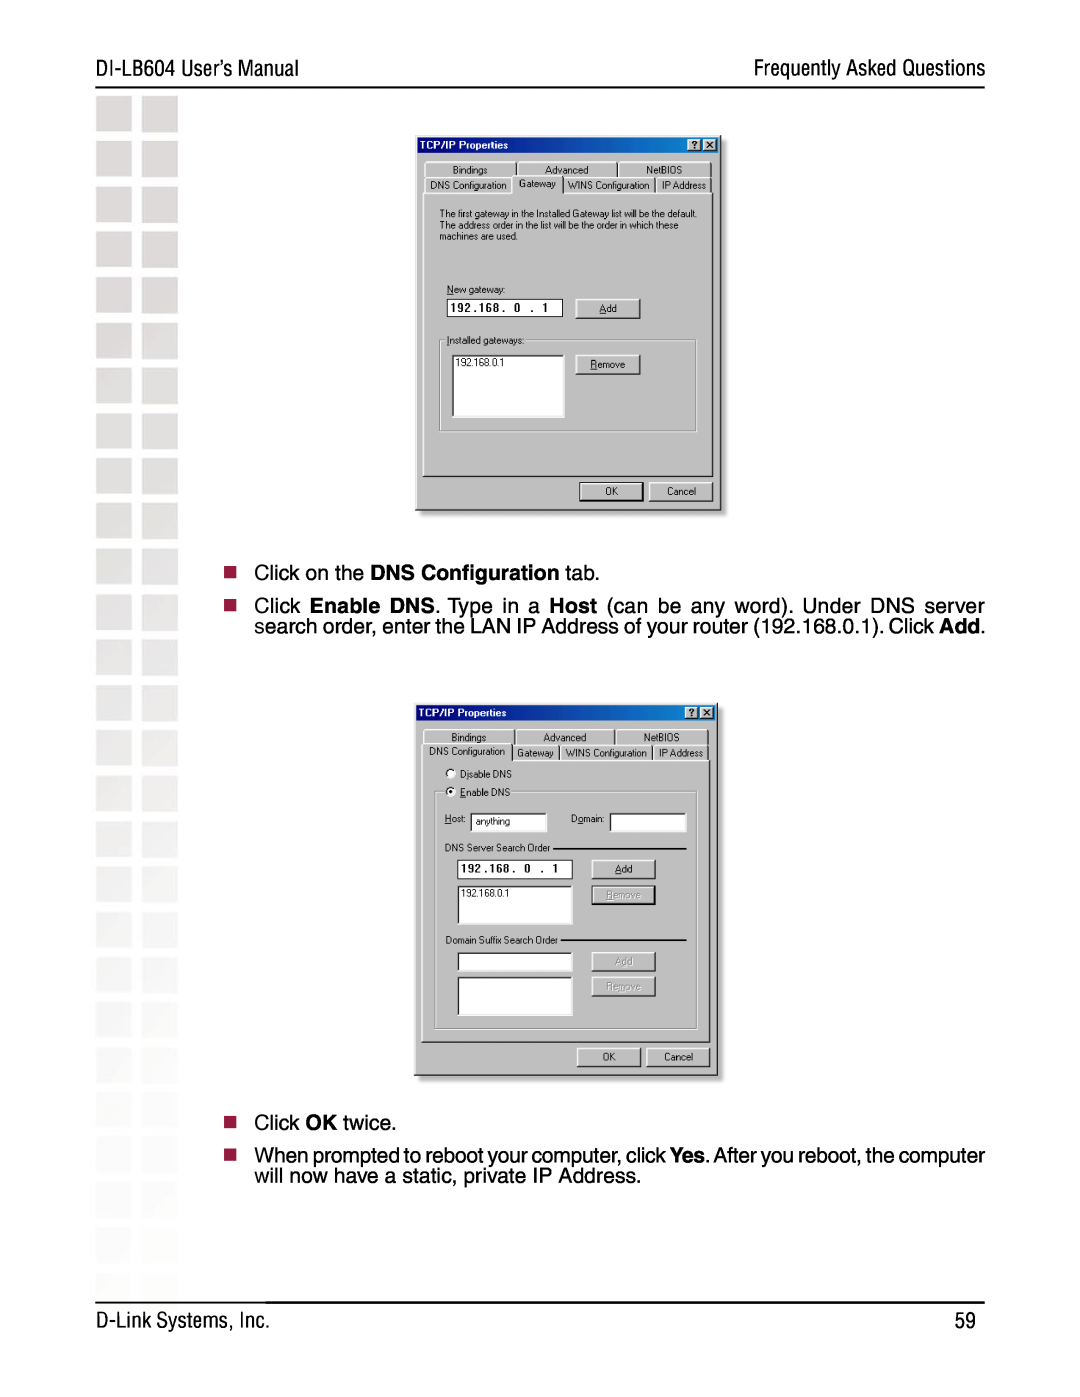 D-Link manual DI-LB604 User’s Manual,  Click on the DNS Conﬁguration tab,  Click OK twice, D-Link Systems, Inc 